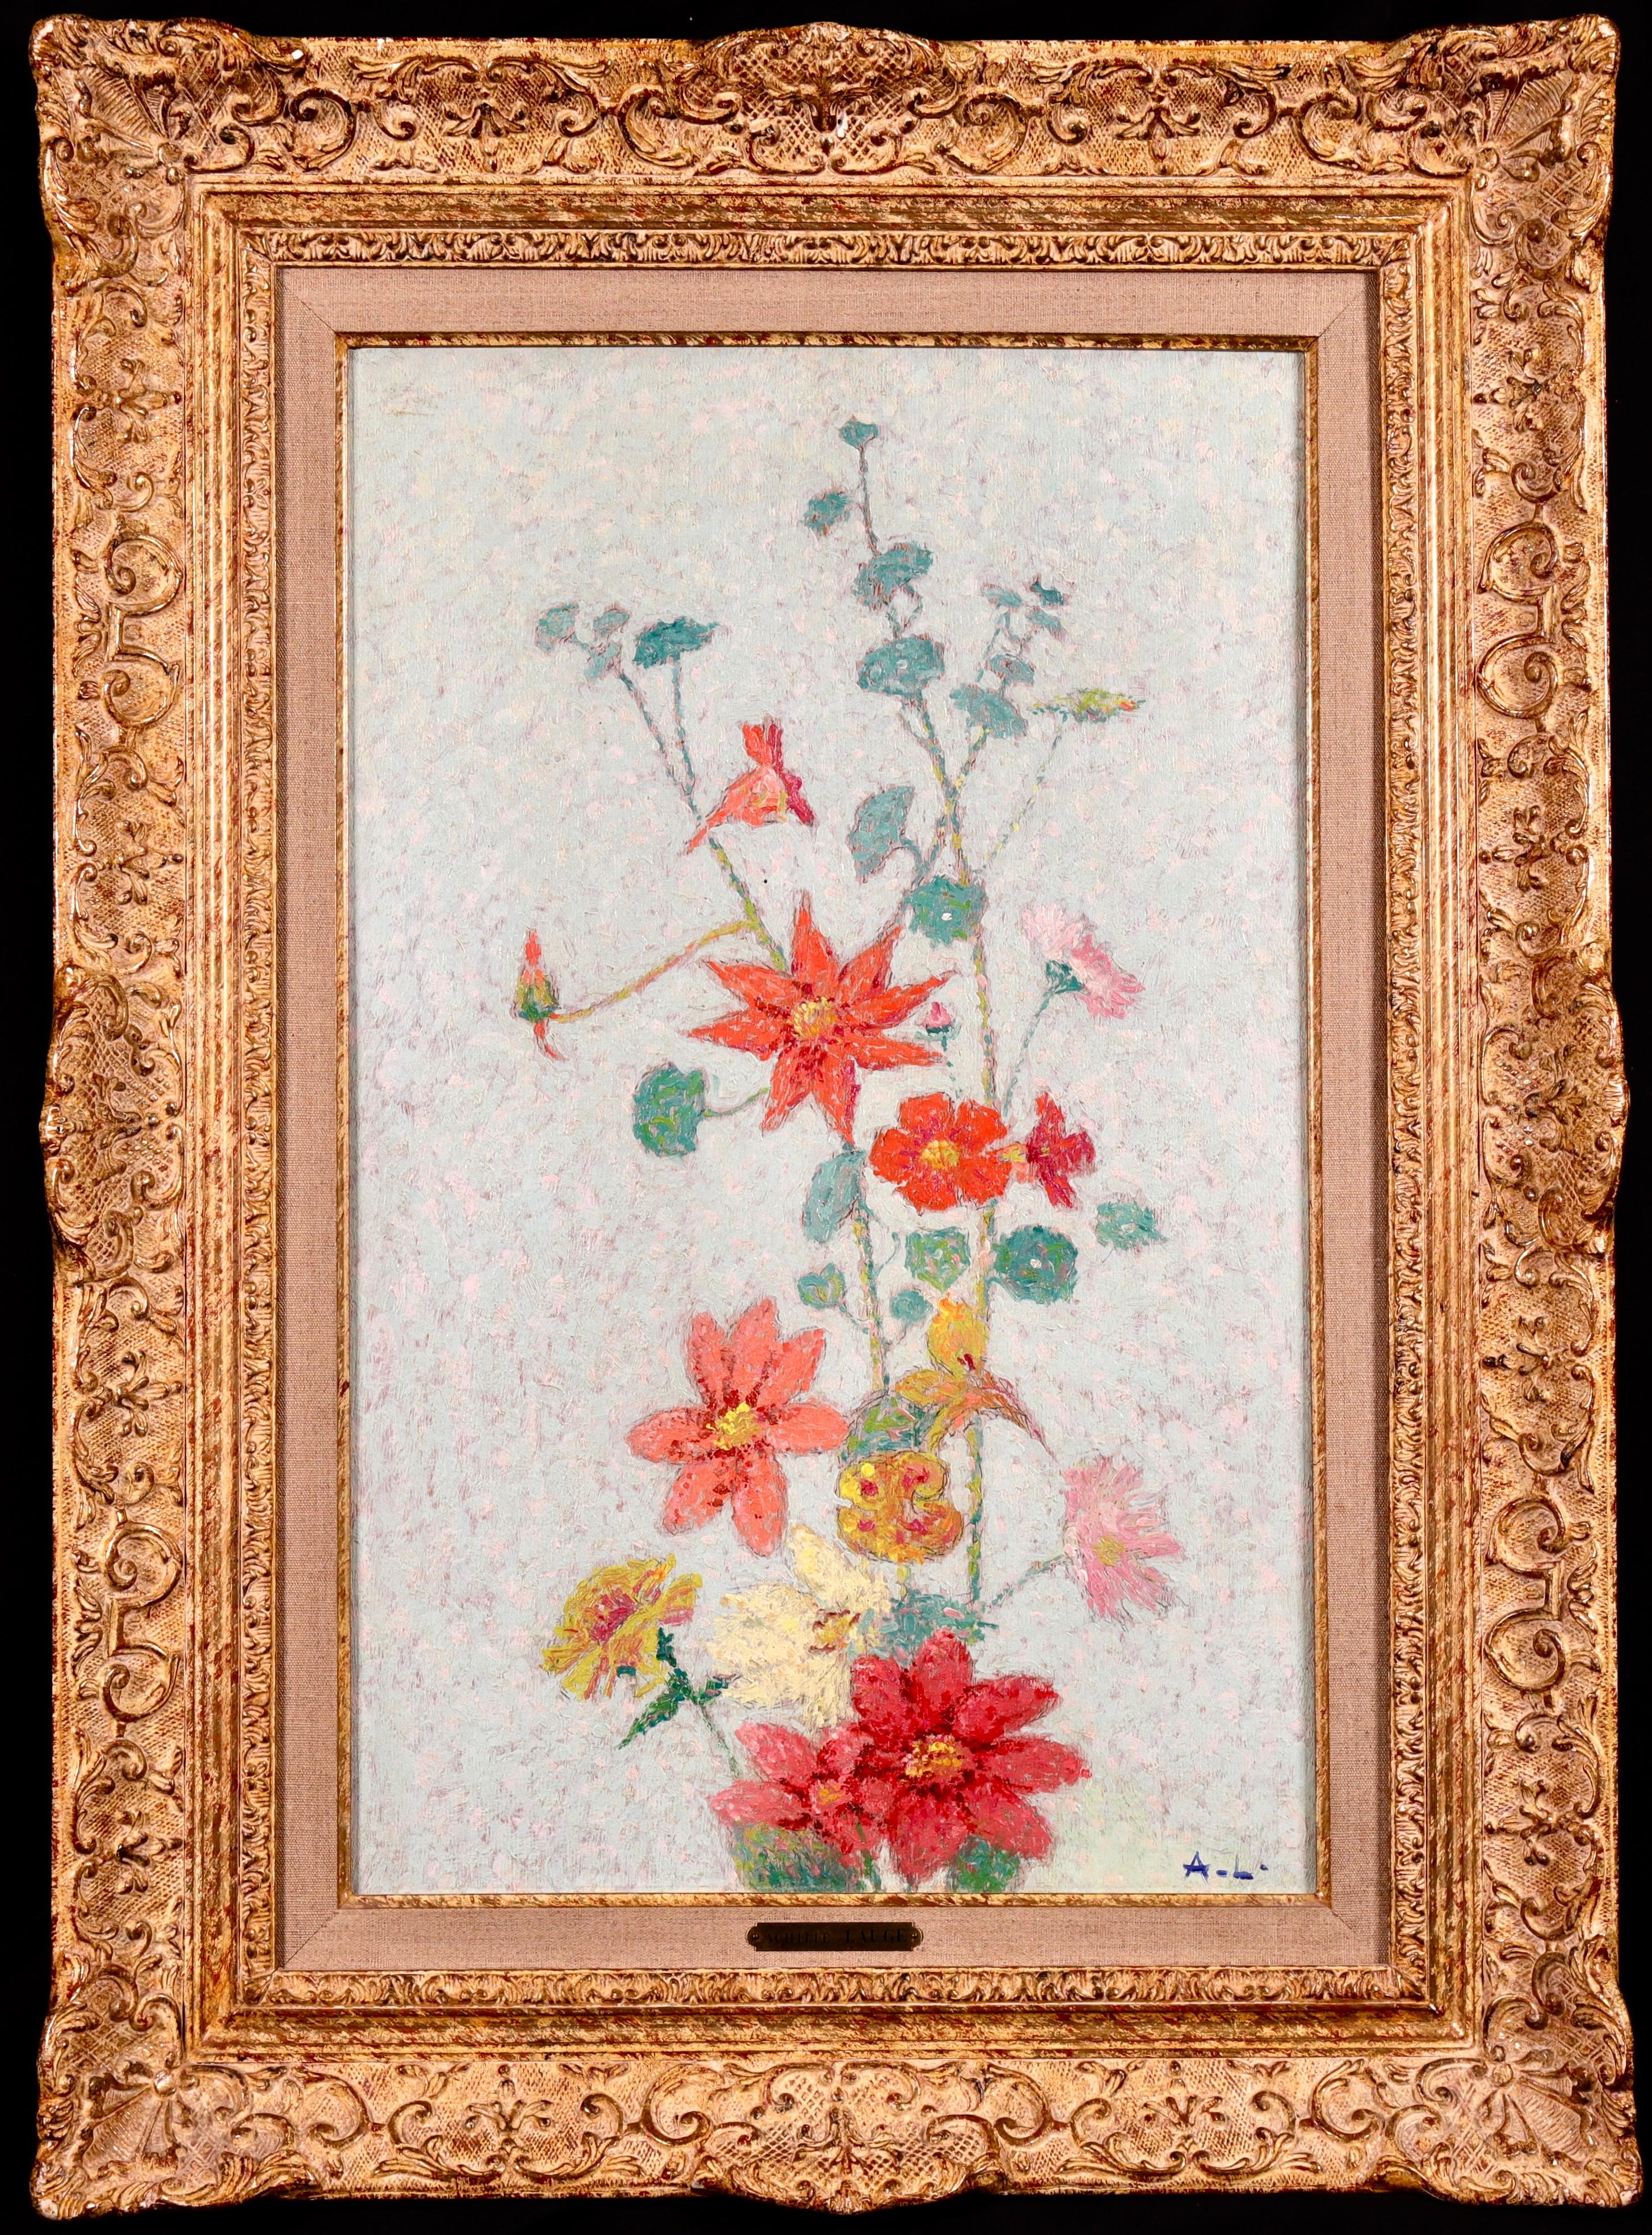 Wildflowers - 19th Century Pointillist Oil, Still Life Flowers by Achille Lauge - Painting by Achille Laugé